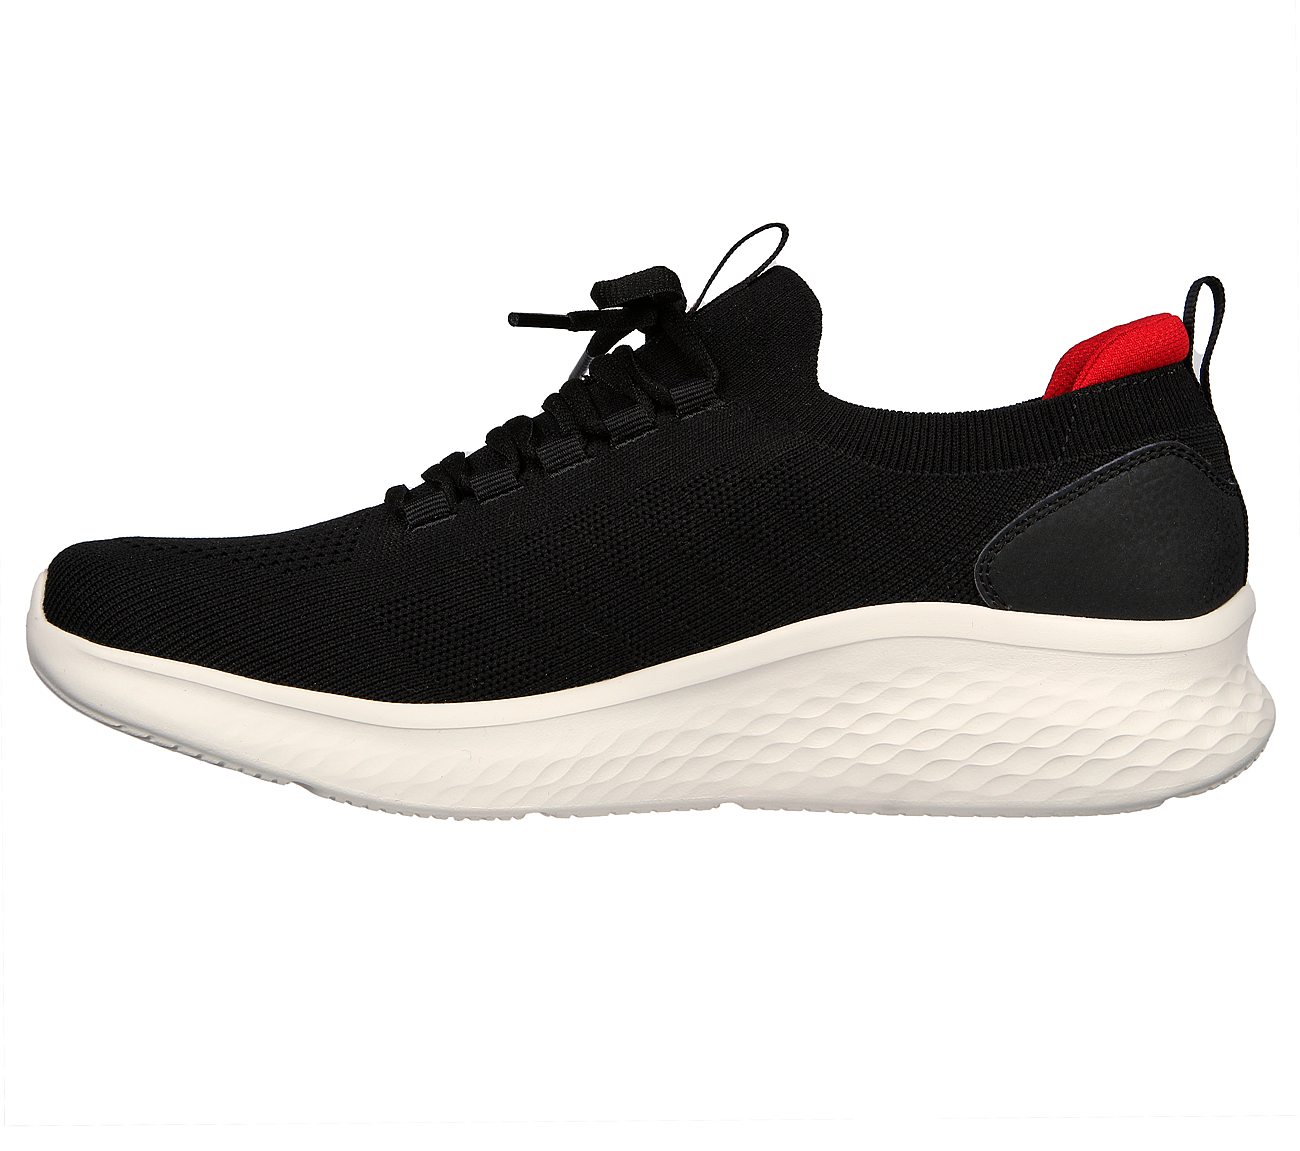 SKECH-LITE PRO - FAINT FLAIR, BLACK/RED Footwear Left View